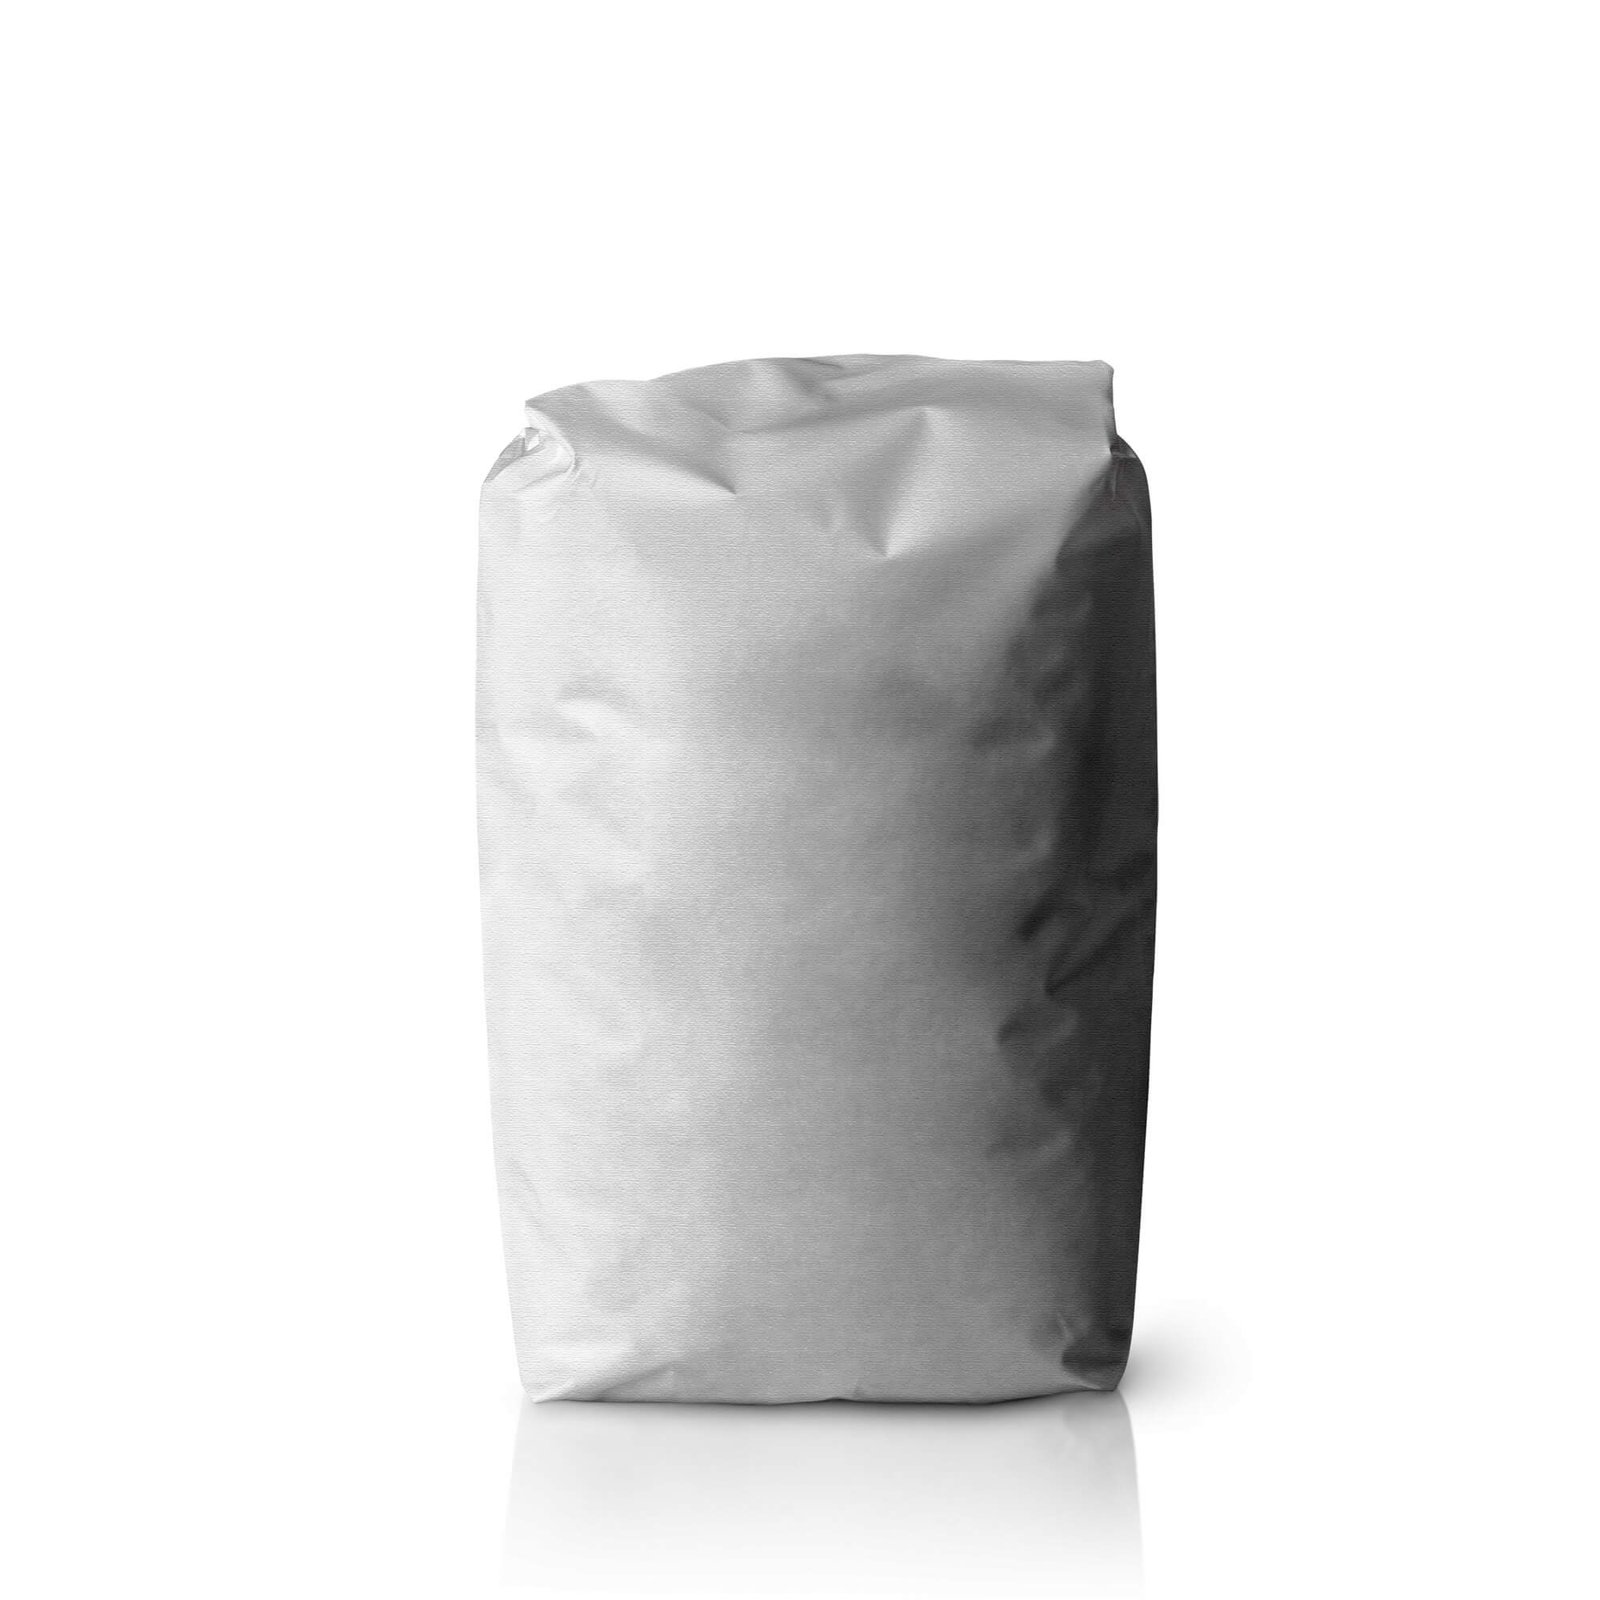 Blank Free Rice Bag Mockup PSD Template